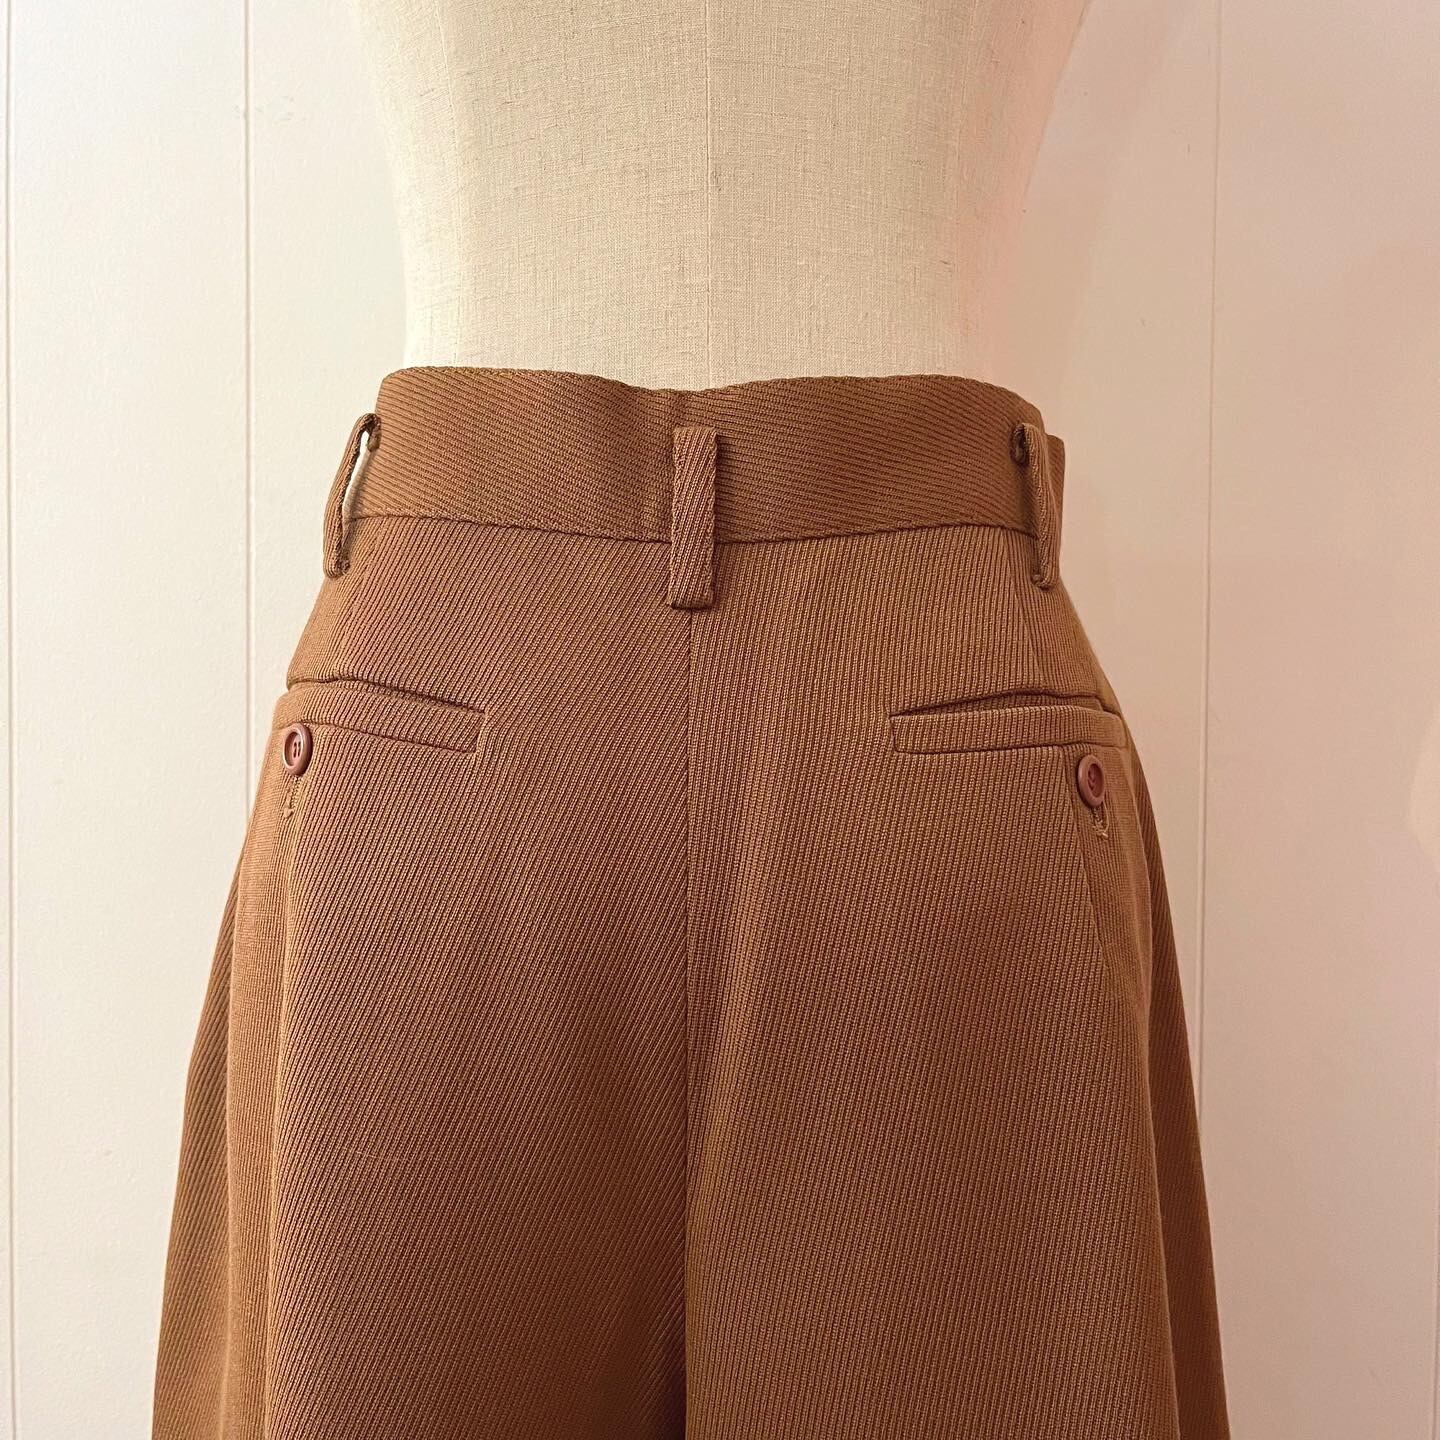 Christian Dior sports / brown half pants